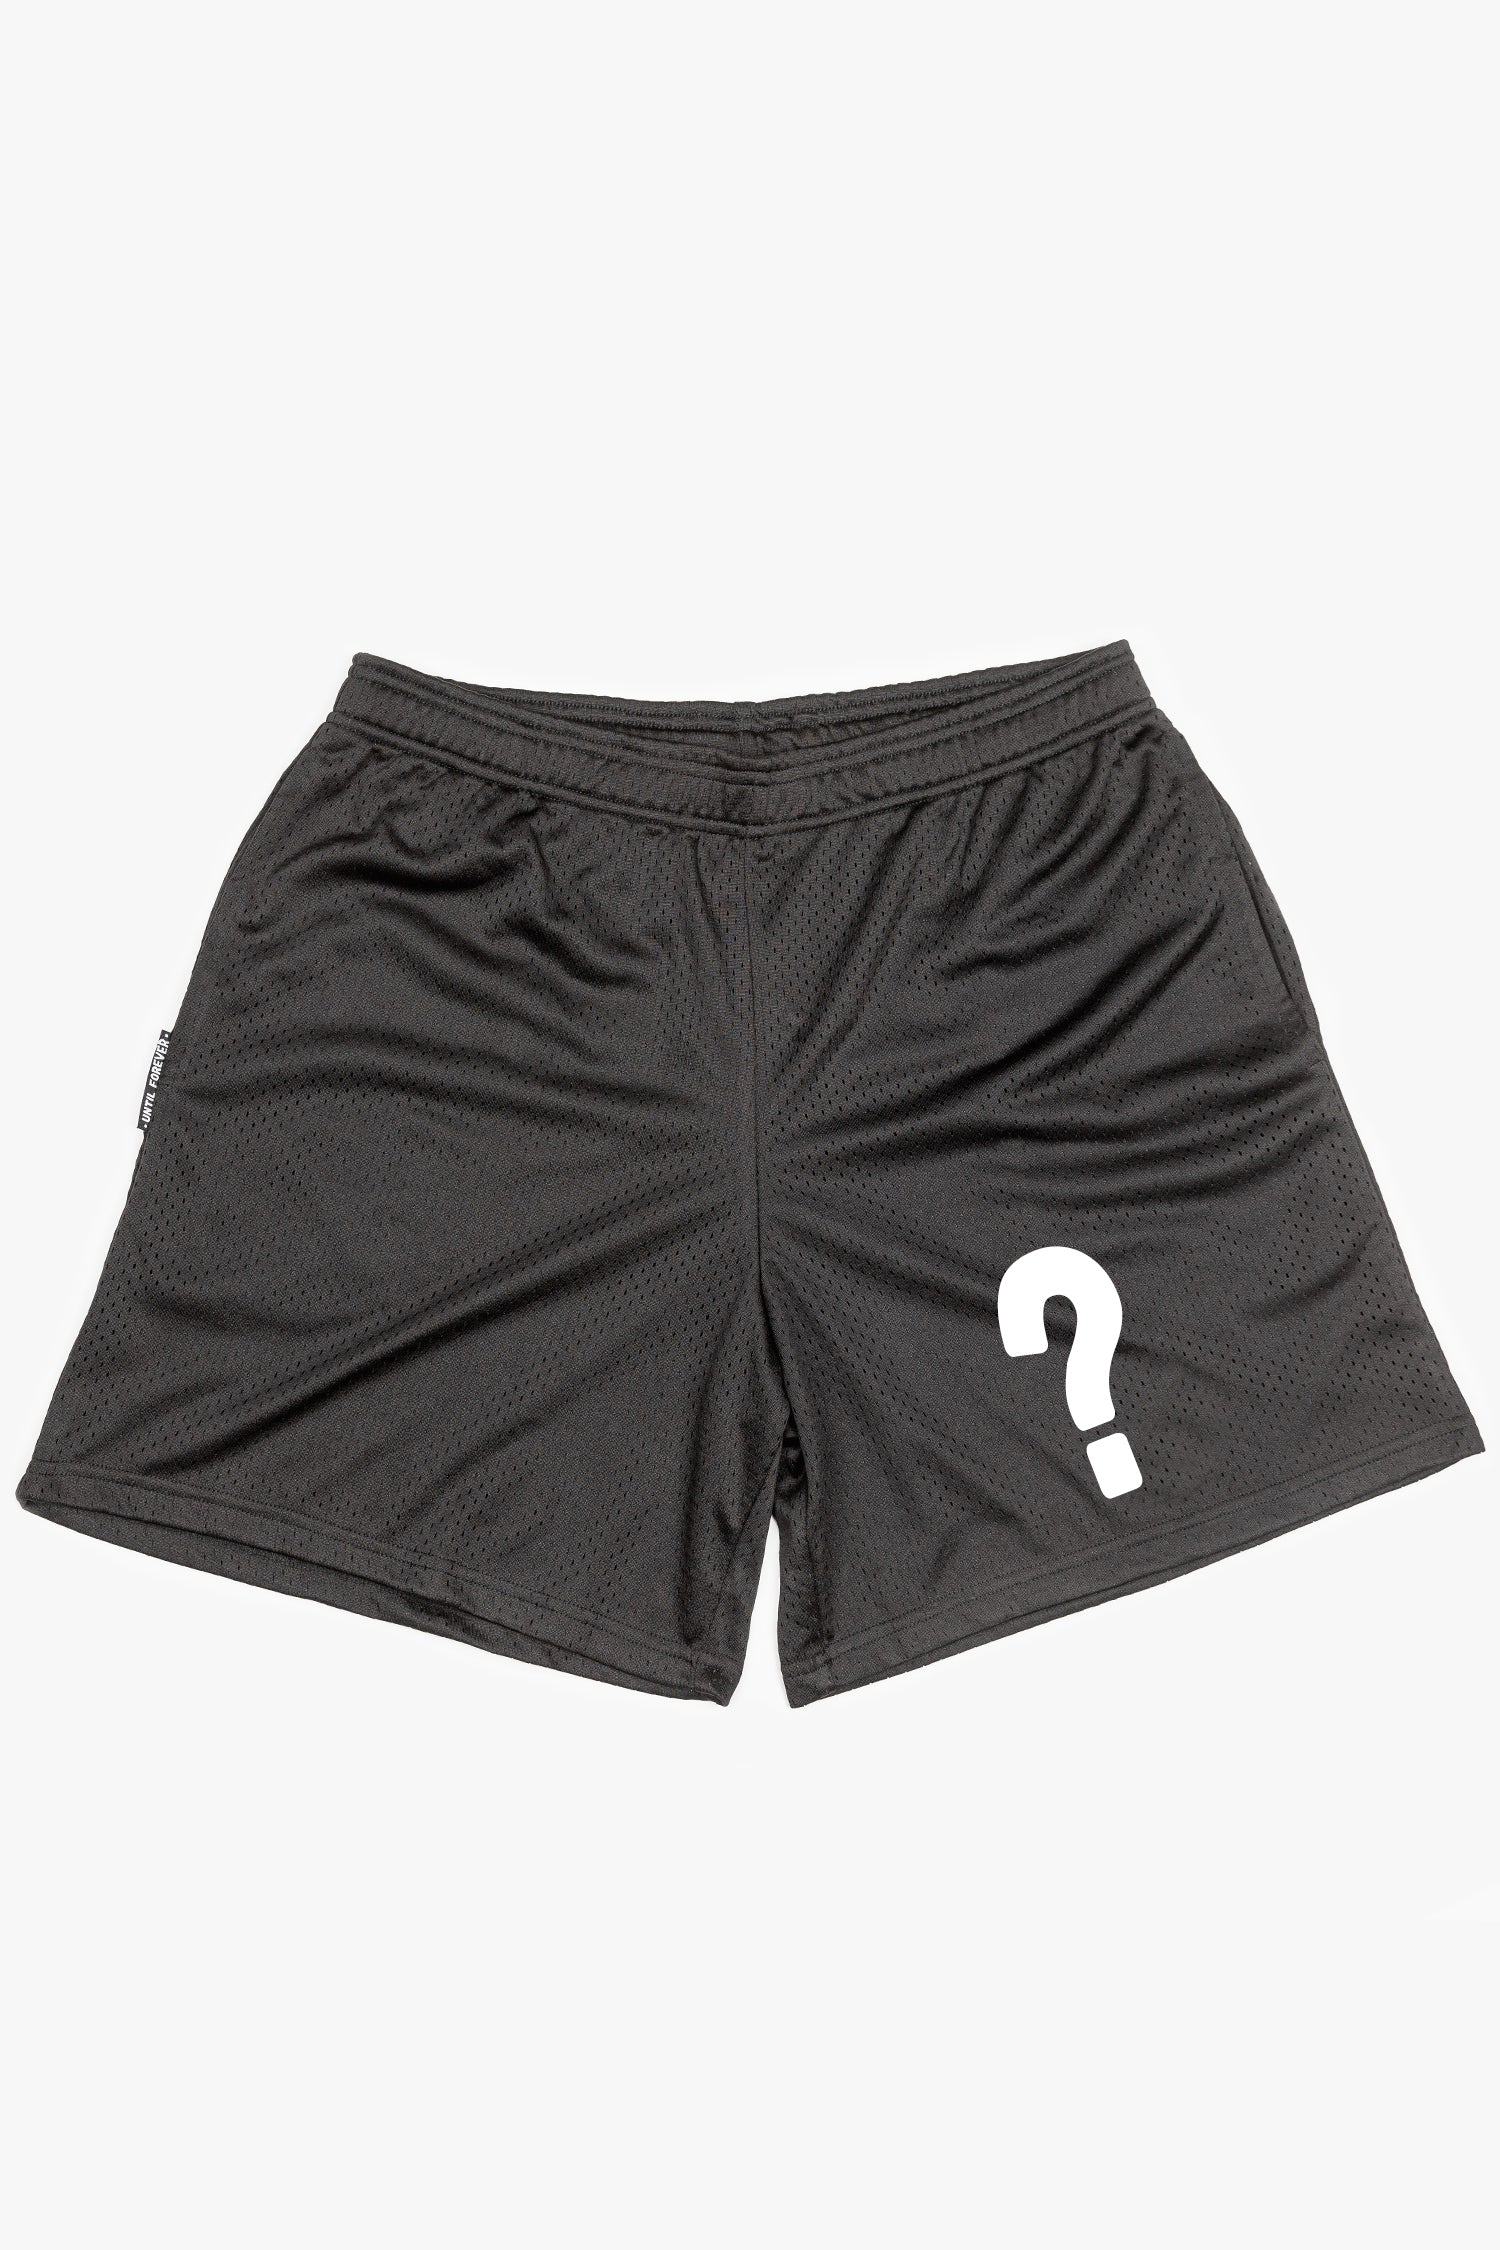 Mystery Shorts - Indestructible MFG